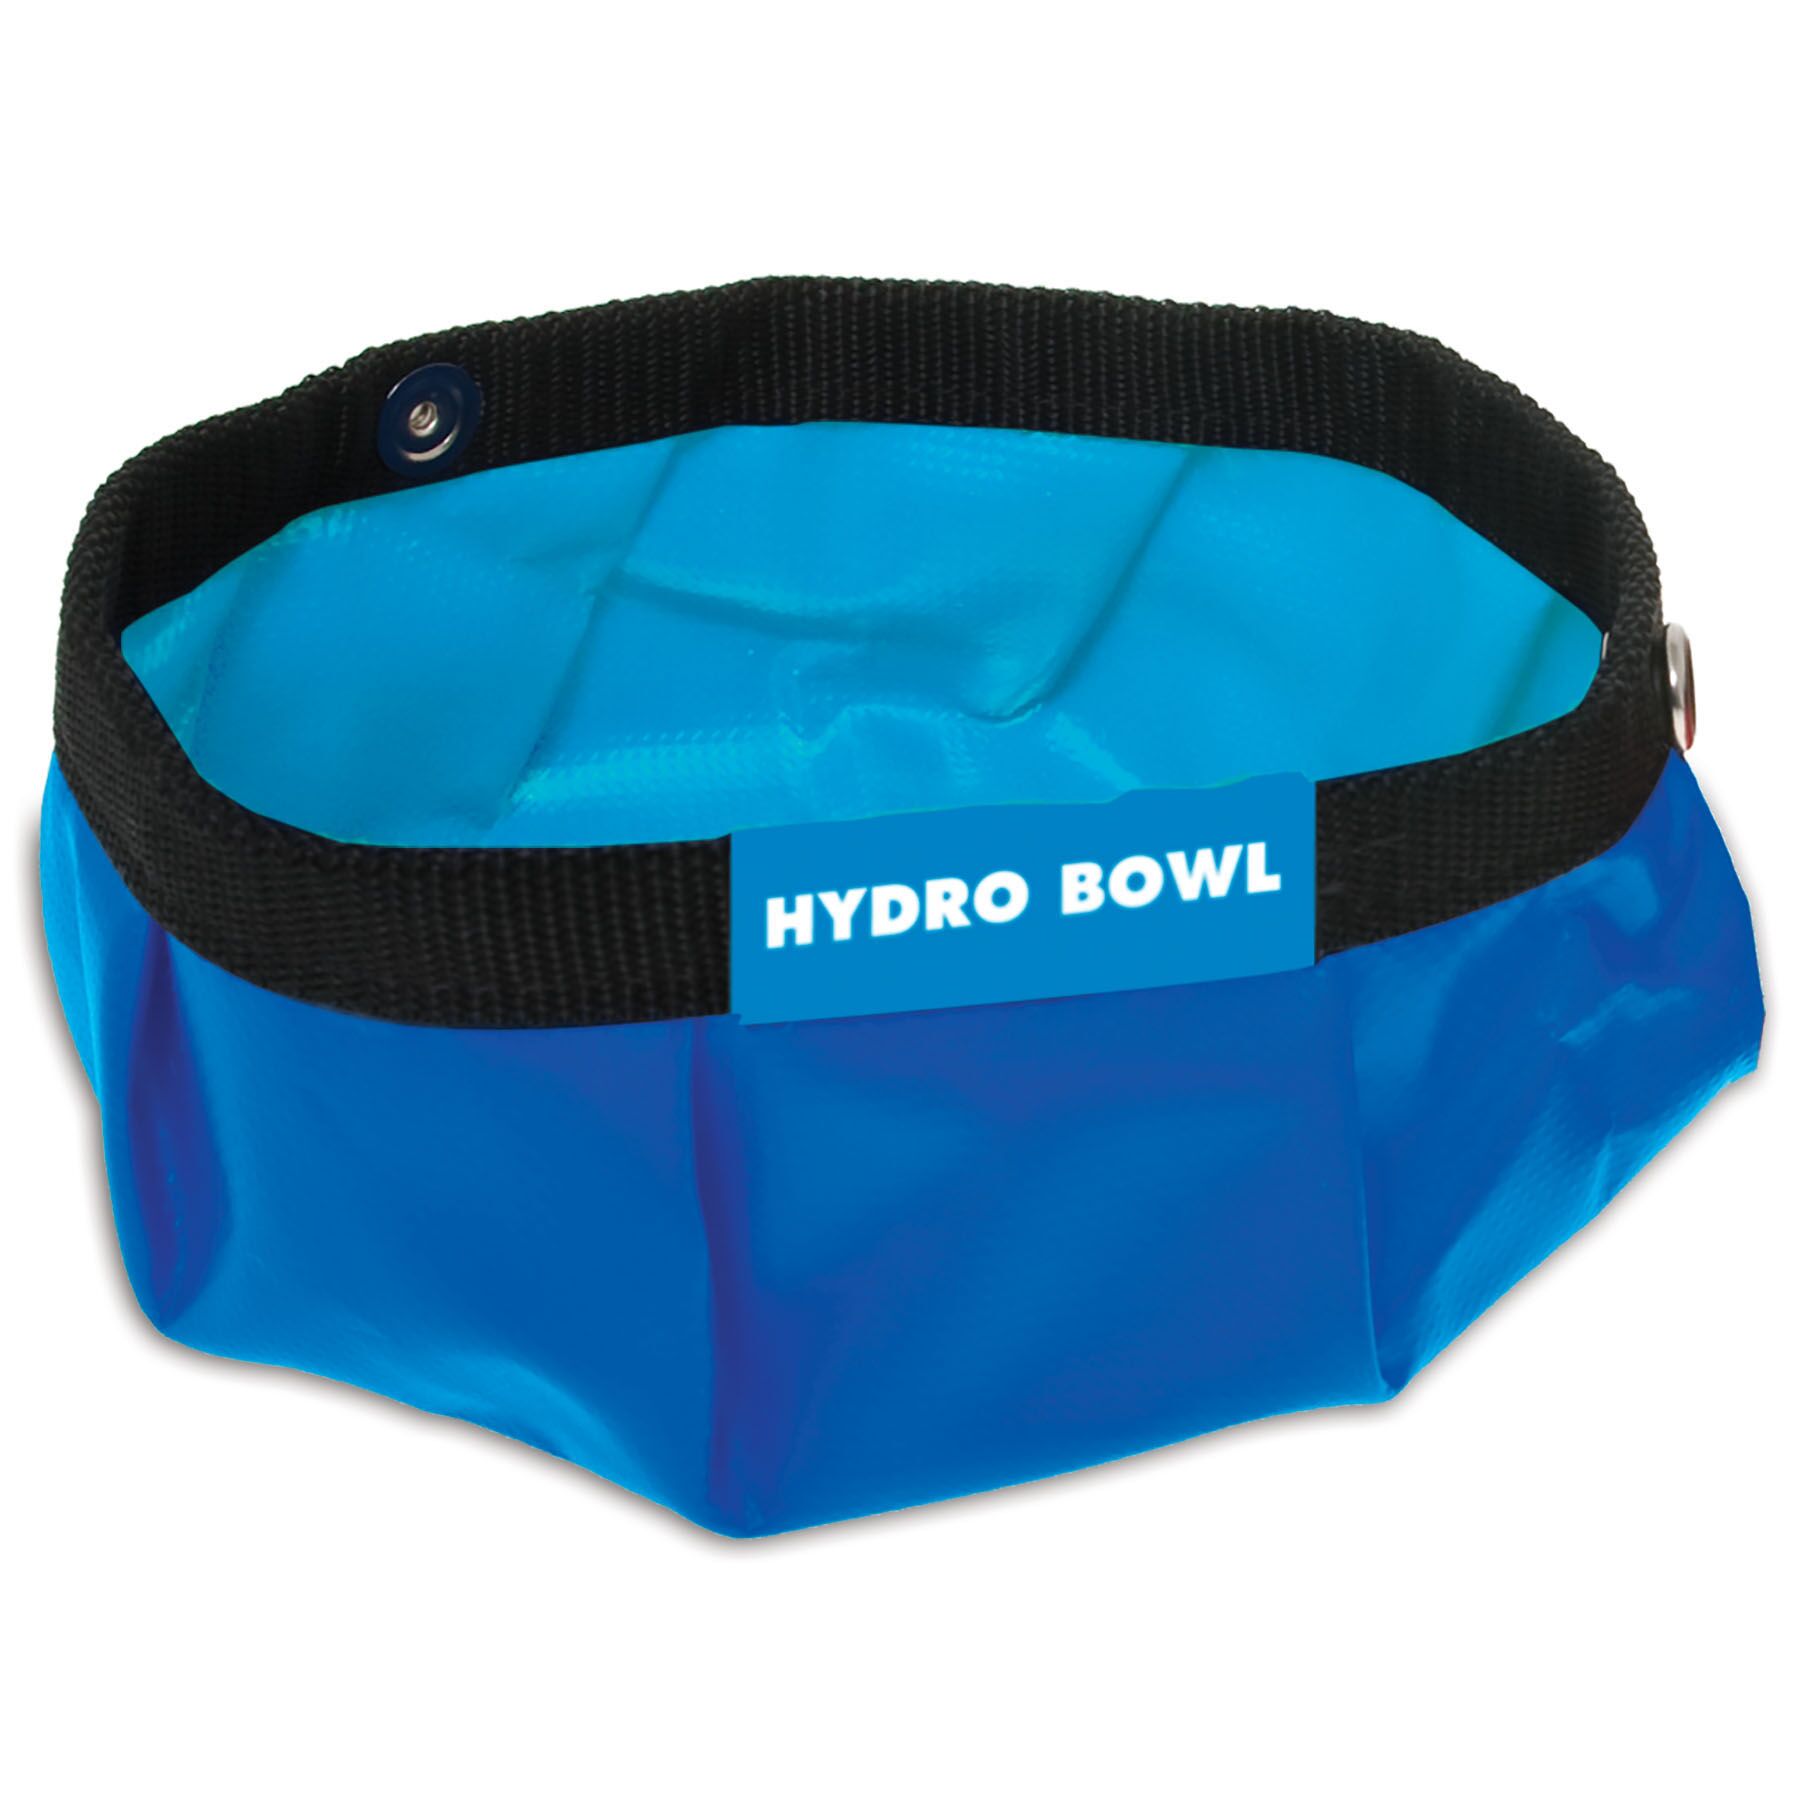 hydro bowl